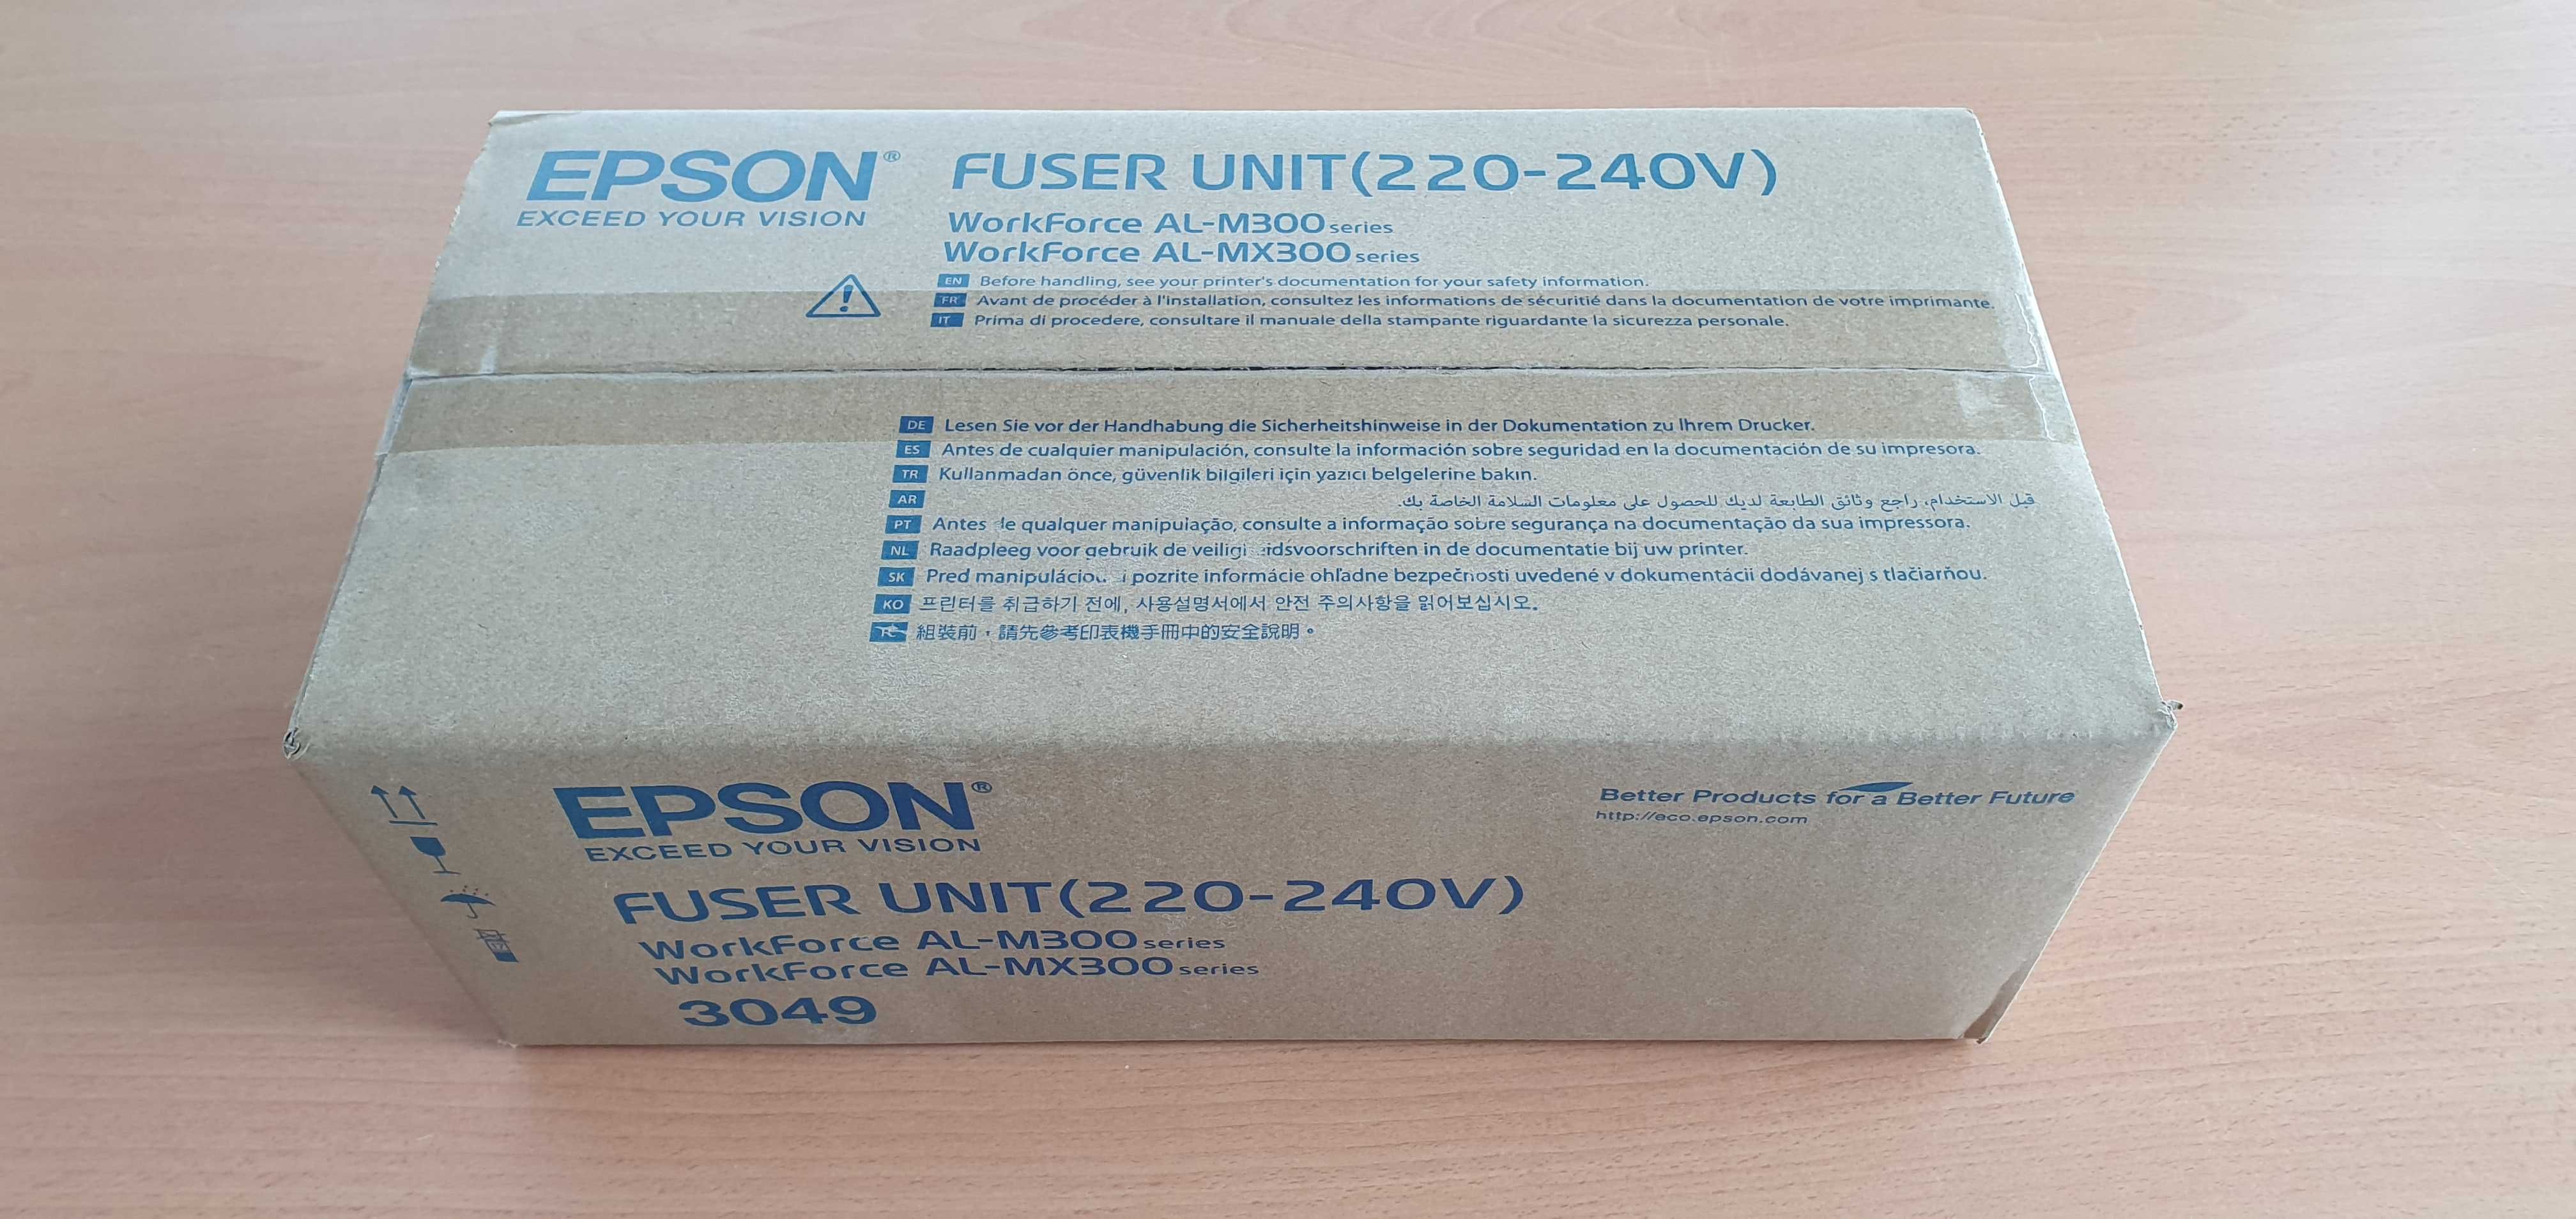 Epson Fuser UNIT WorkForce 3049 (NOVOS)